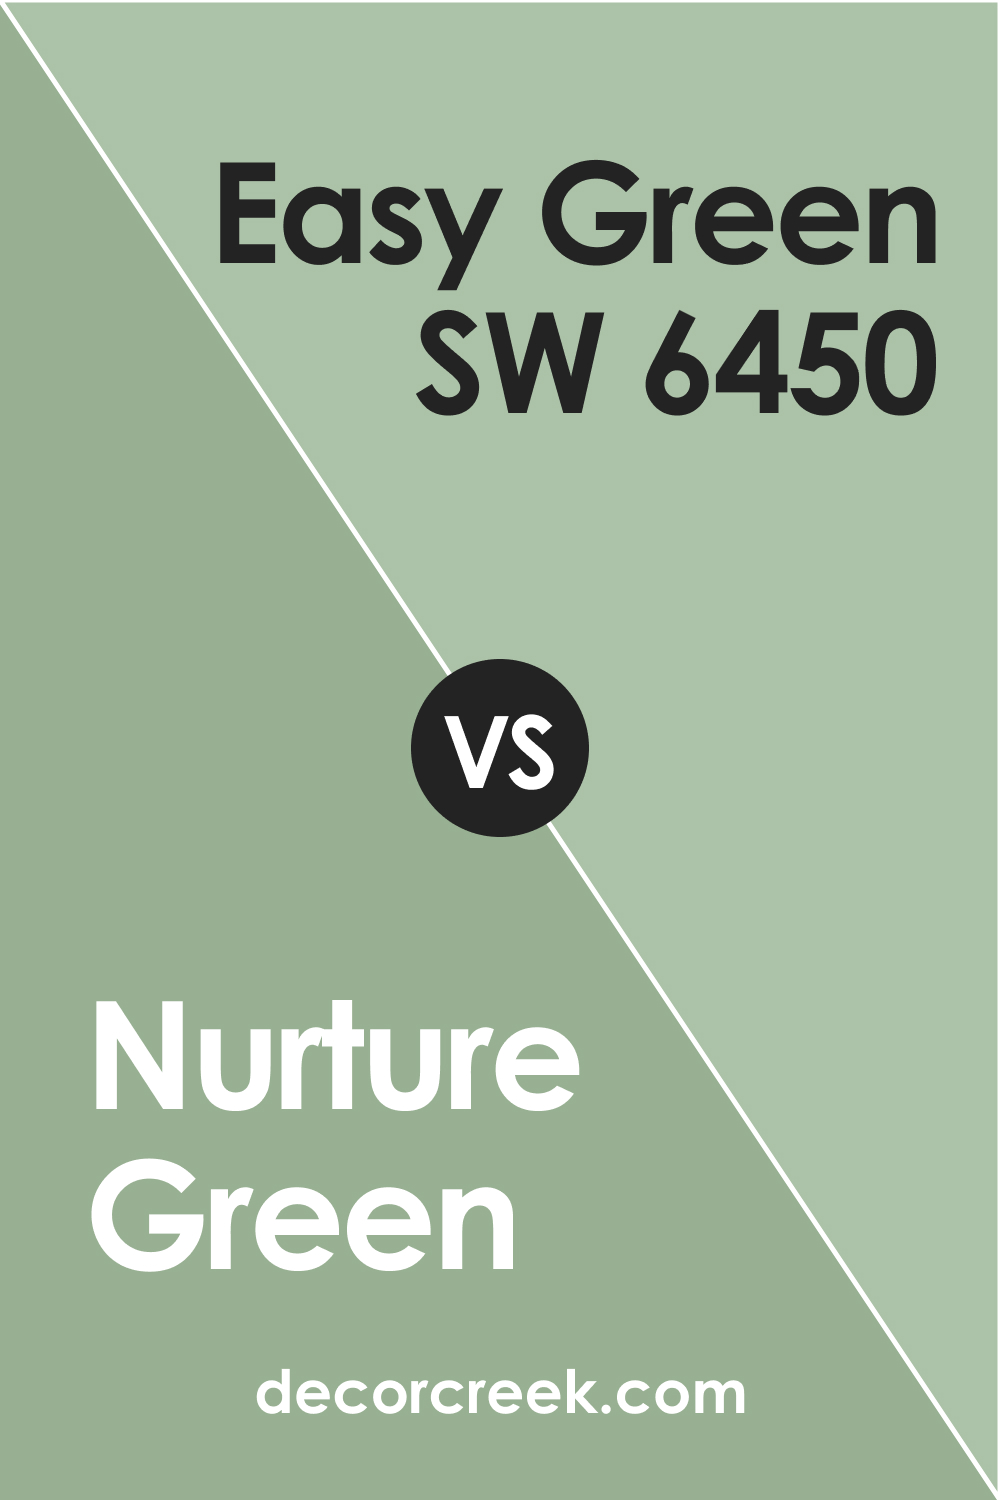 Nurture Green vs Easy Green